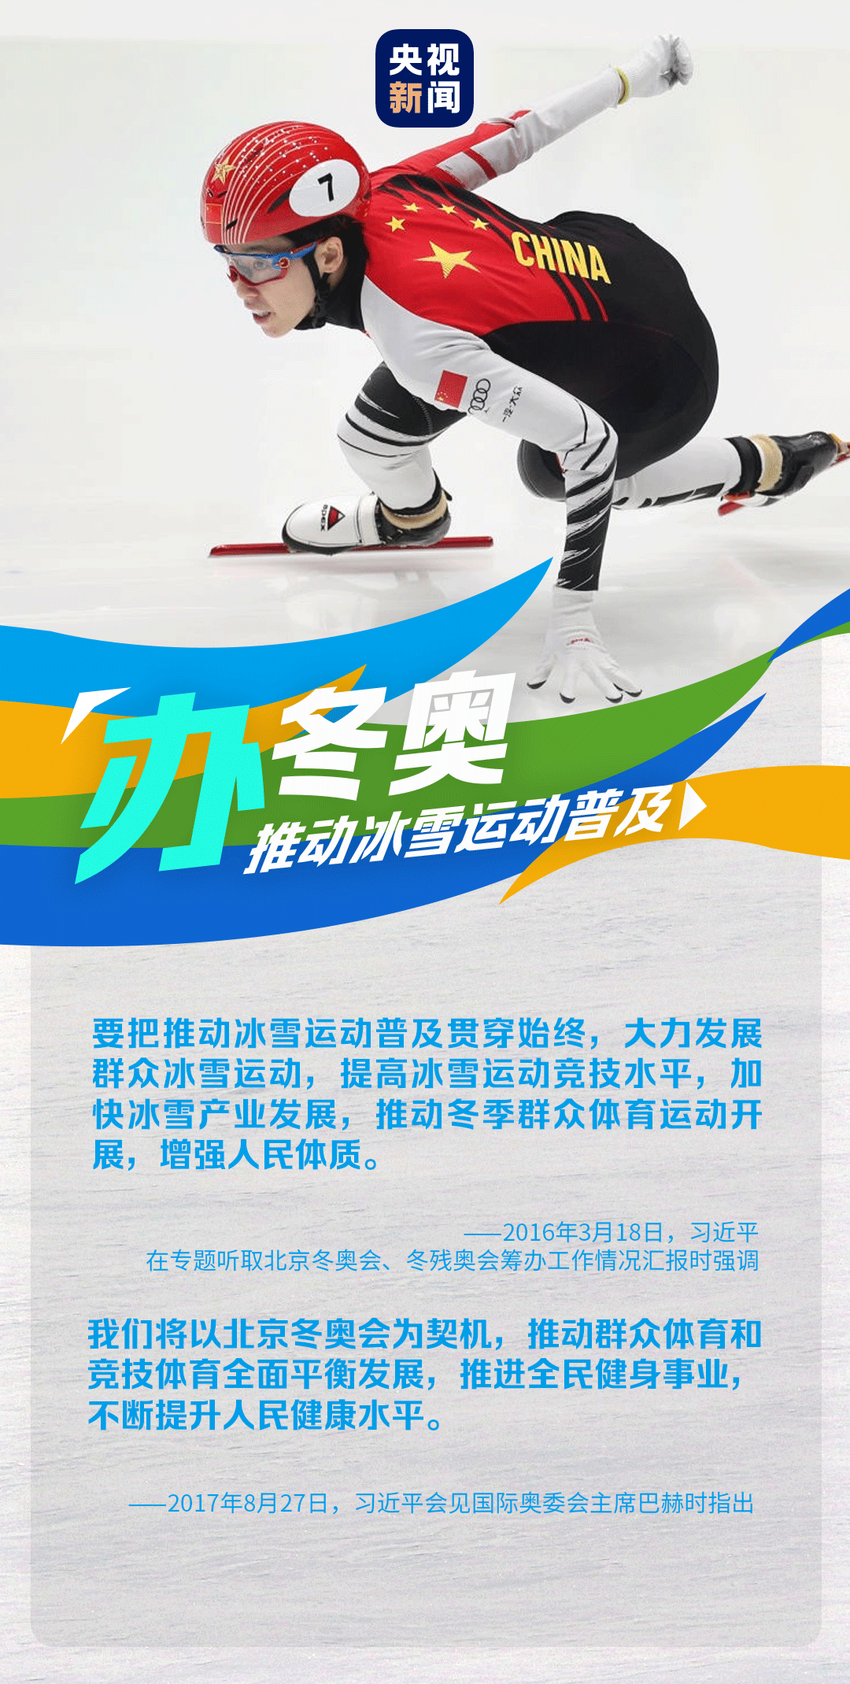 Hari Olahraga Nasional, Xi Jinping Serukan Masyarakat Rajin Berolahraga demi Rajin Bekerja_fororder_kc6